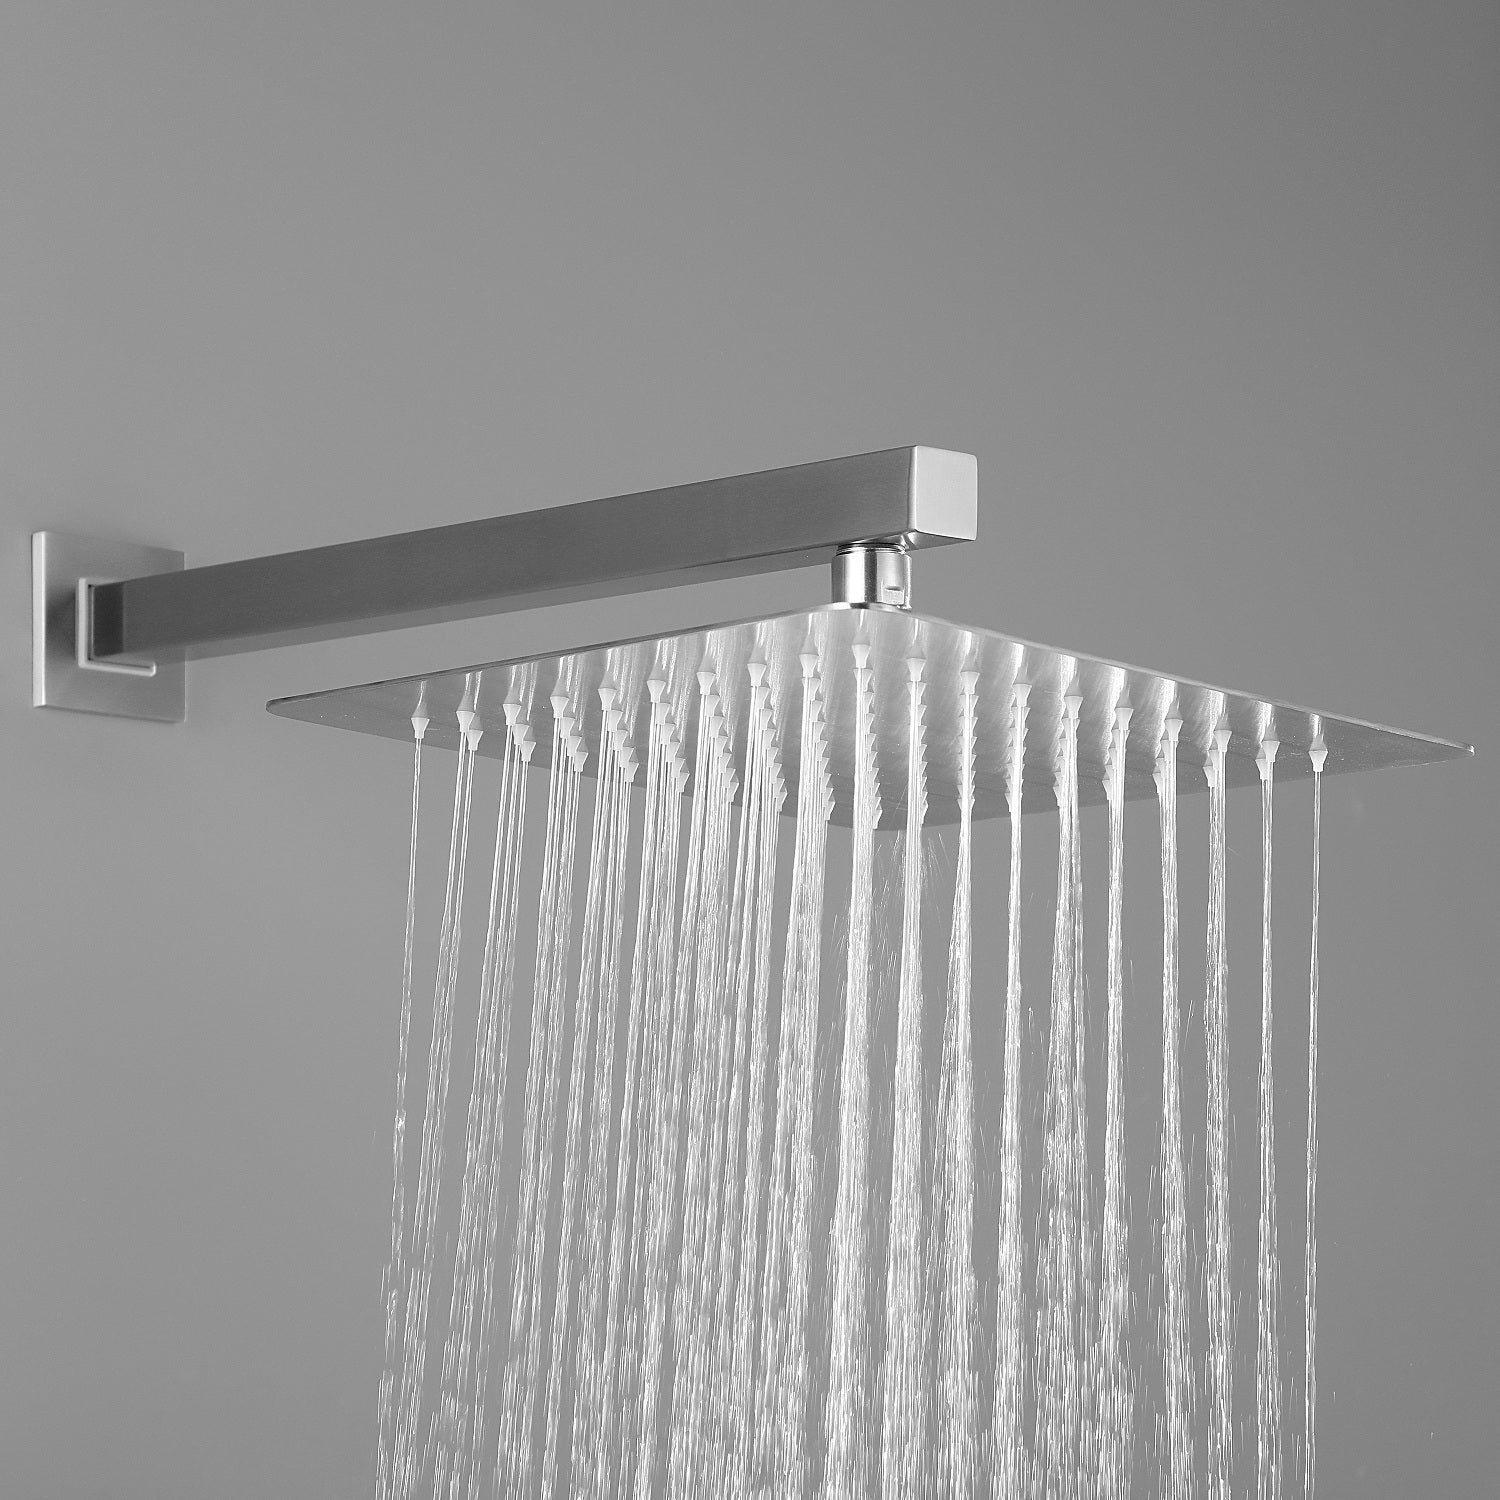 10 inch Shower Head Bathroom Luxury Rain Mixer Shower Complete Combo Set Wall Mounted - Brushed Nickel